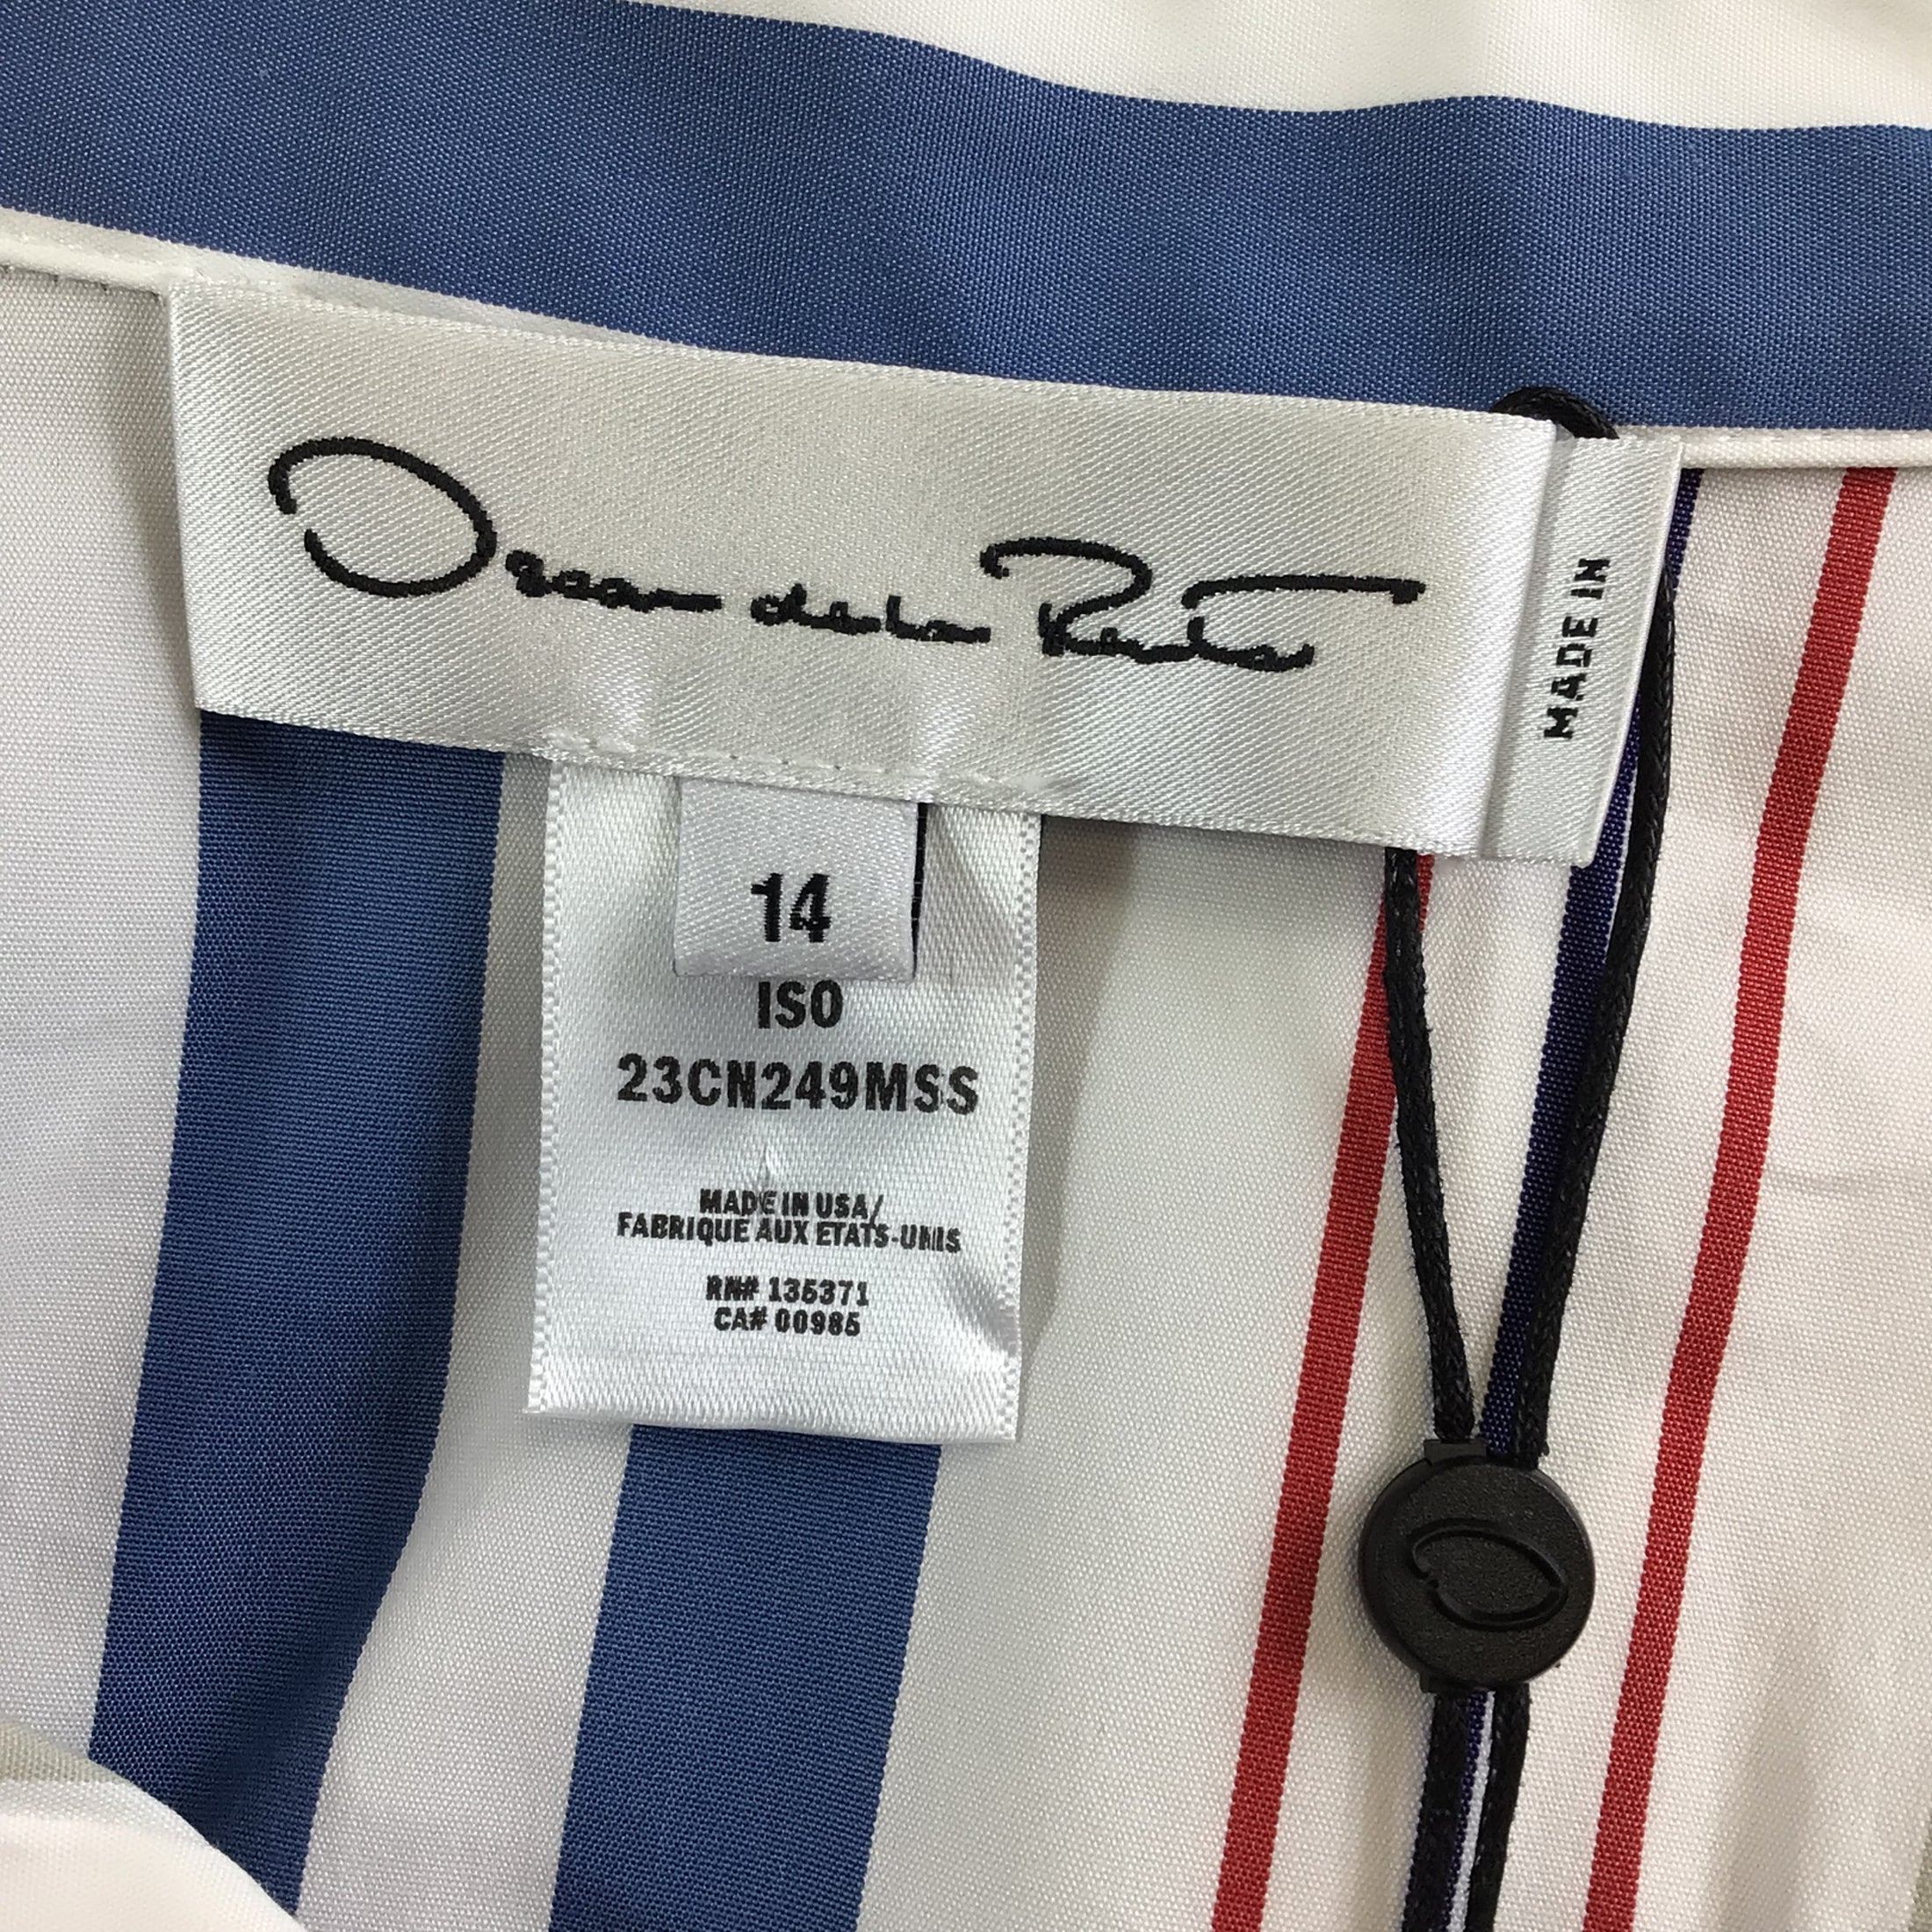 Oscar de la Renta Blue / White / Red Striped Short Sleeved Button-down Cotton Shirt Dress